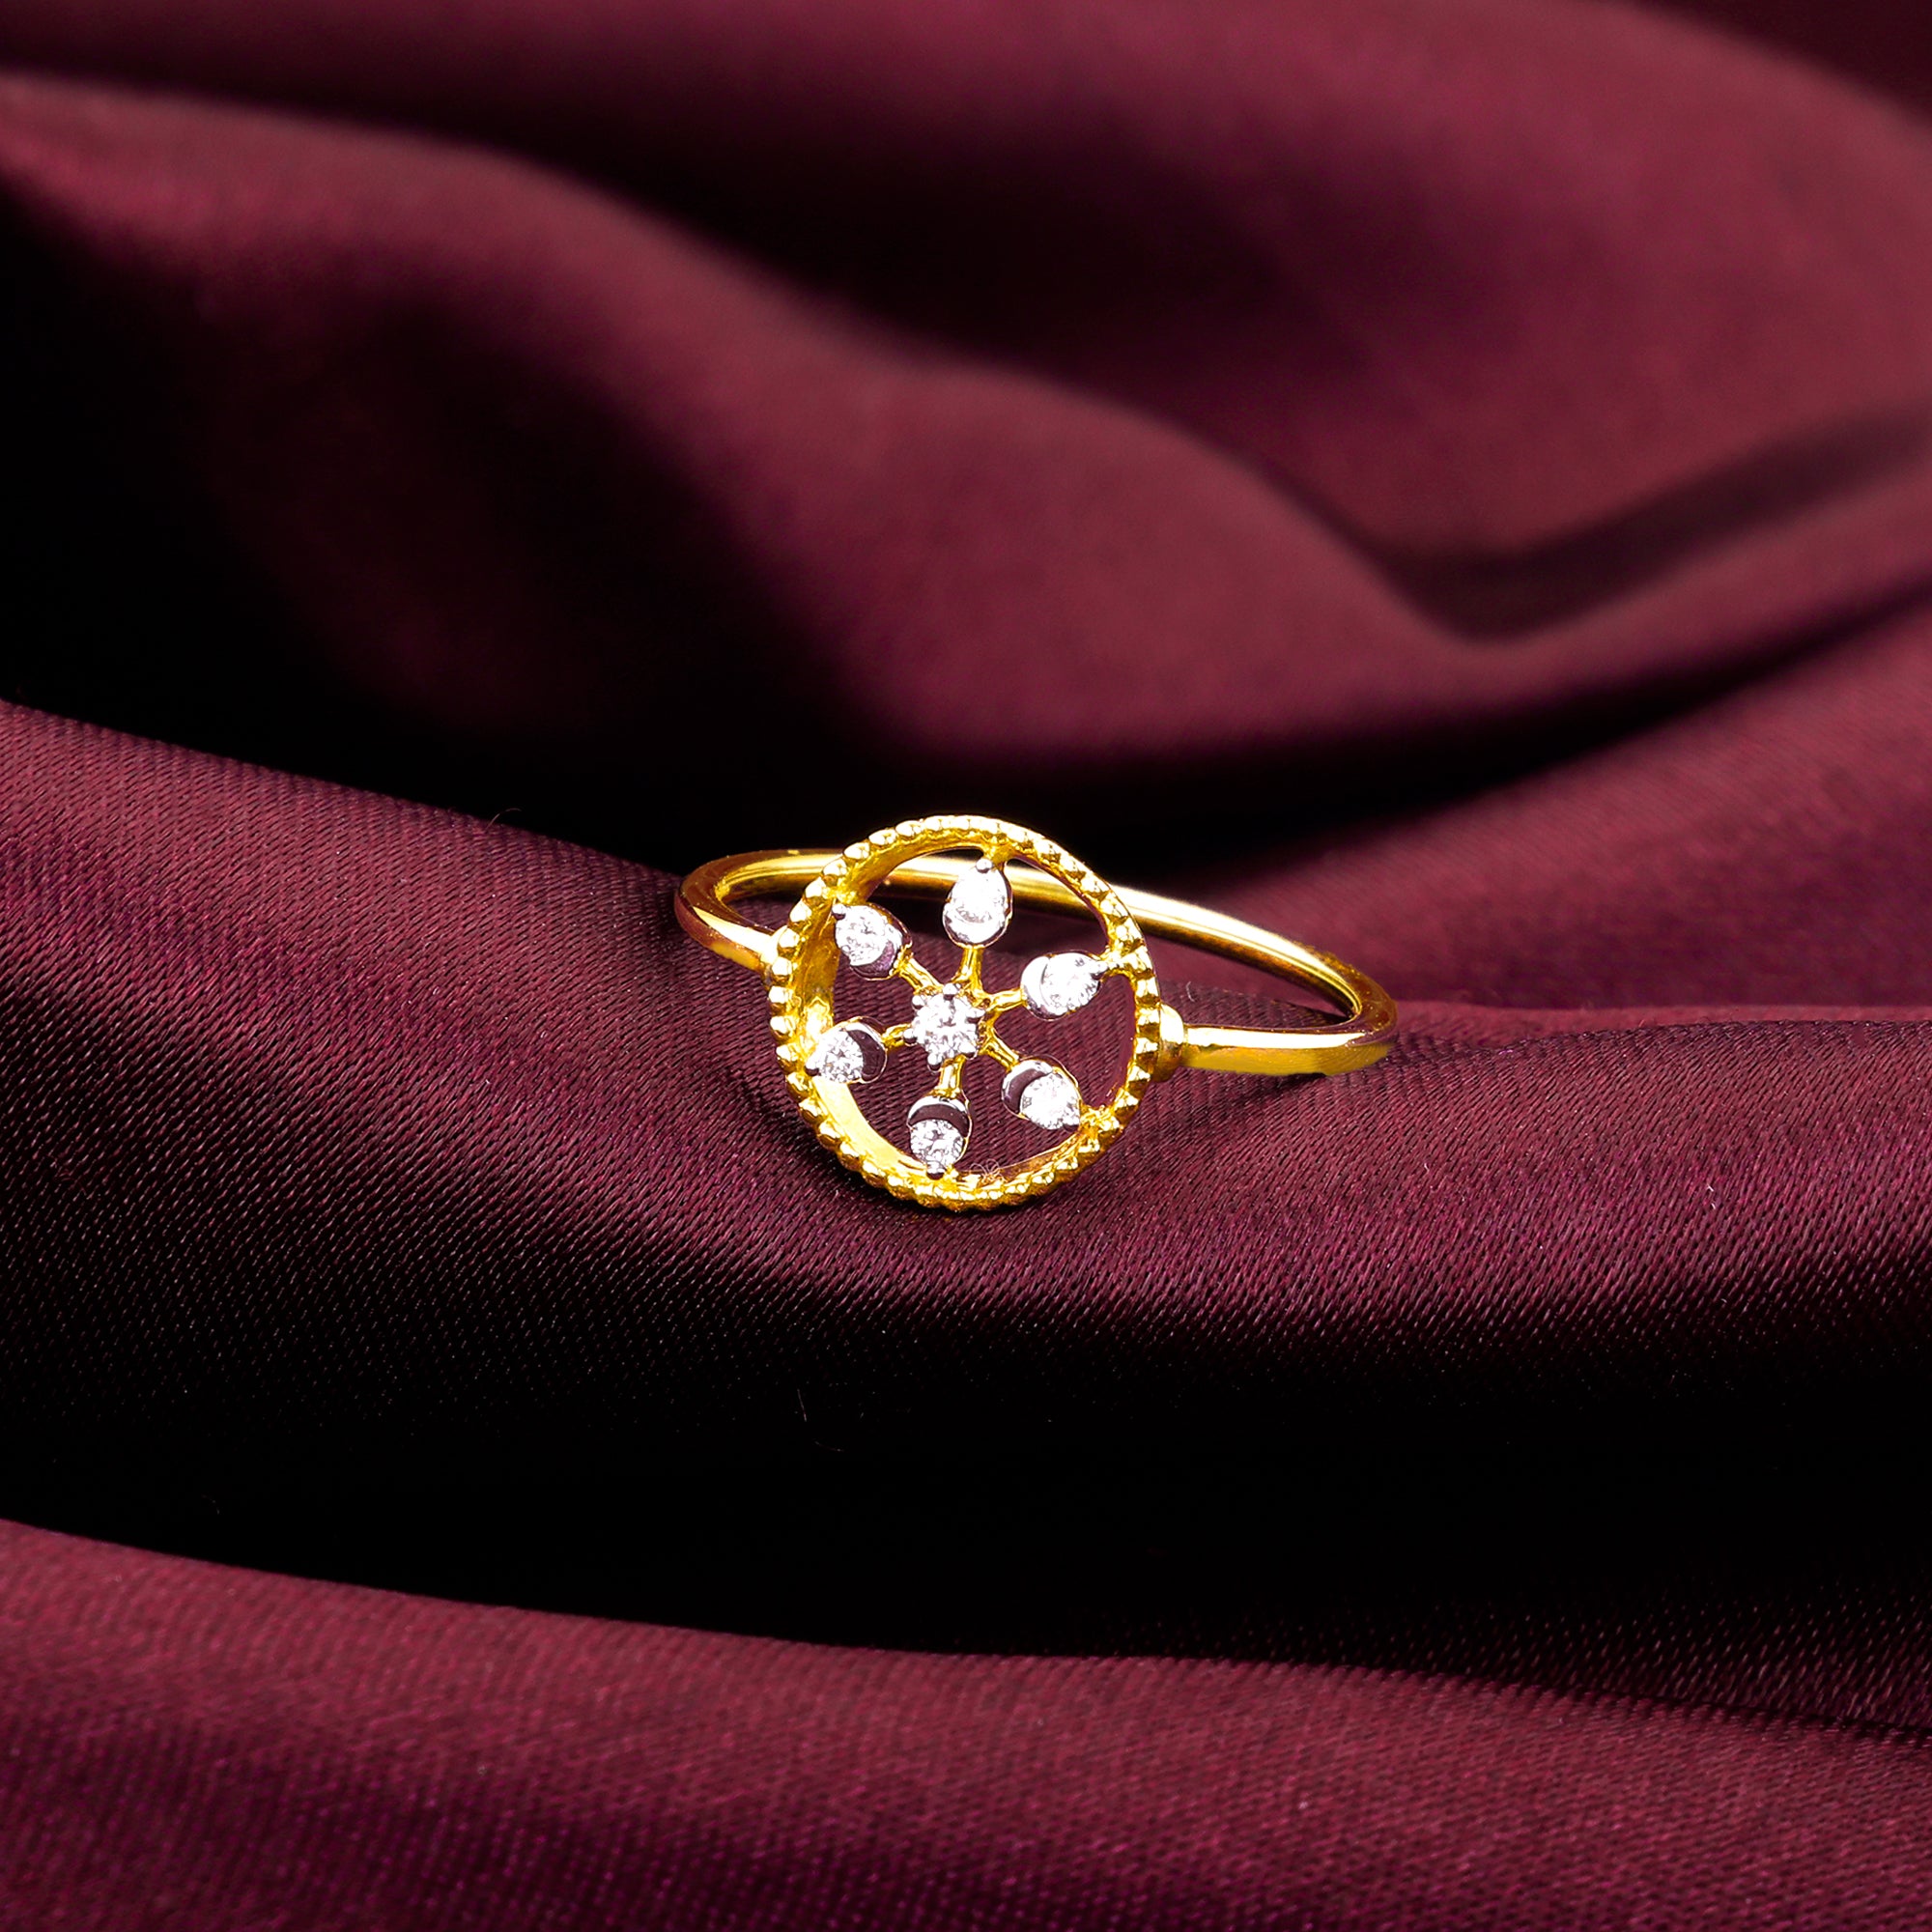 Huge Oval Ruby Gemstone Ring Sterling Silver Gold Statement Engagement Ring  | eBay